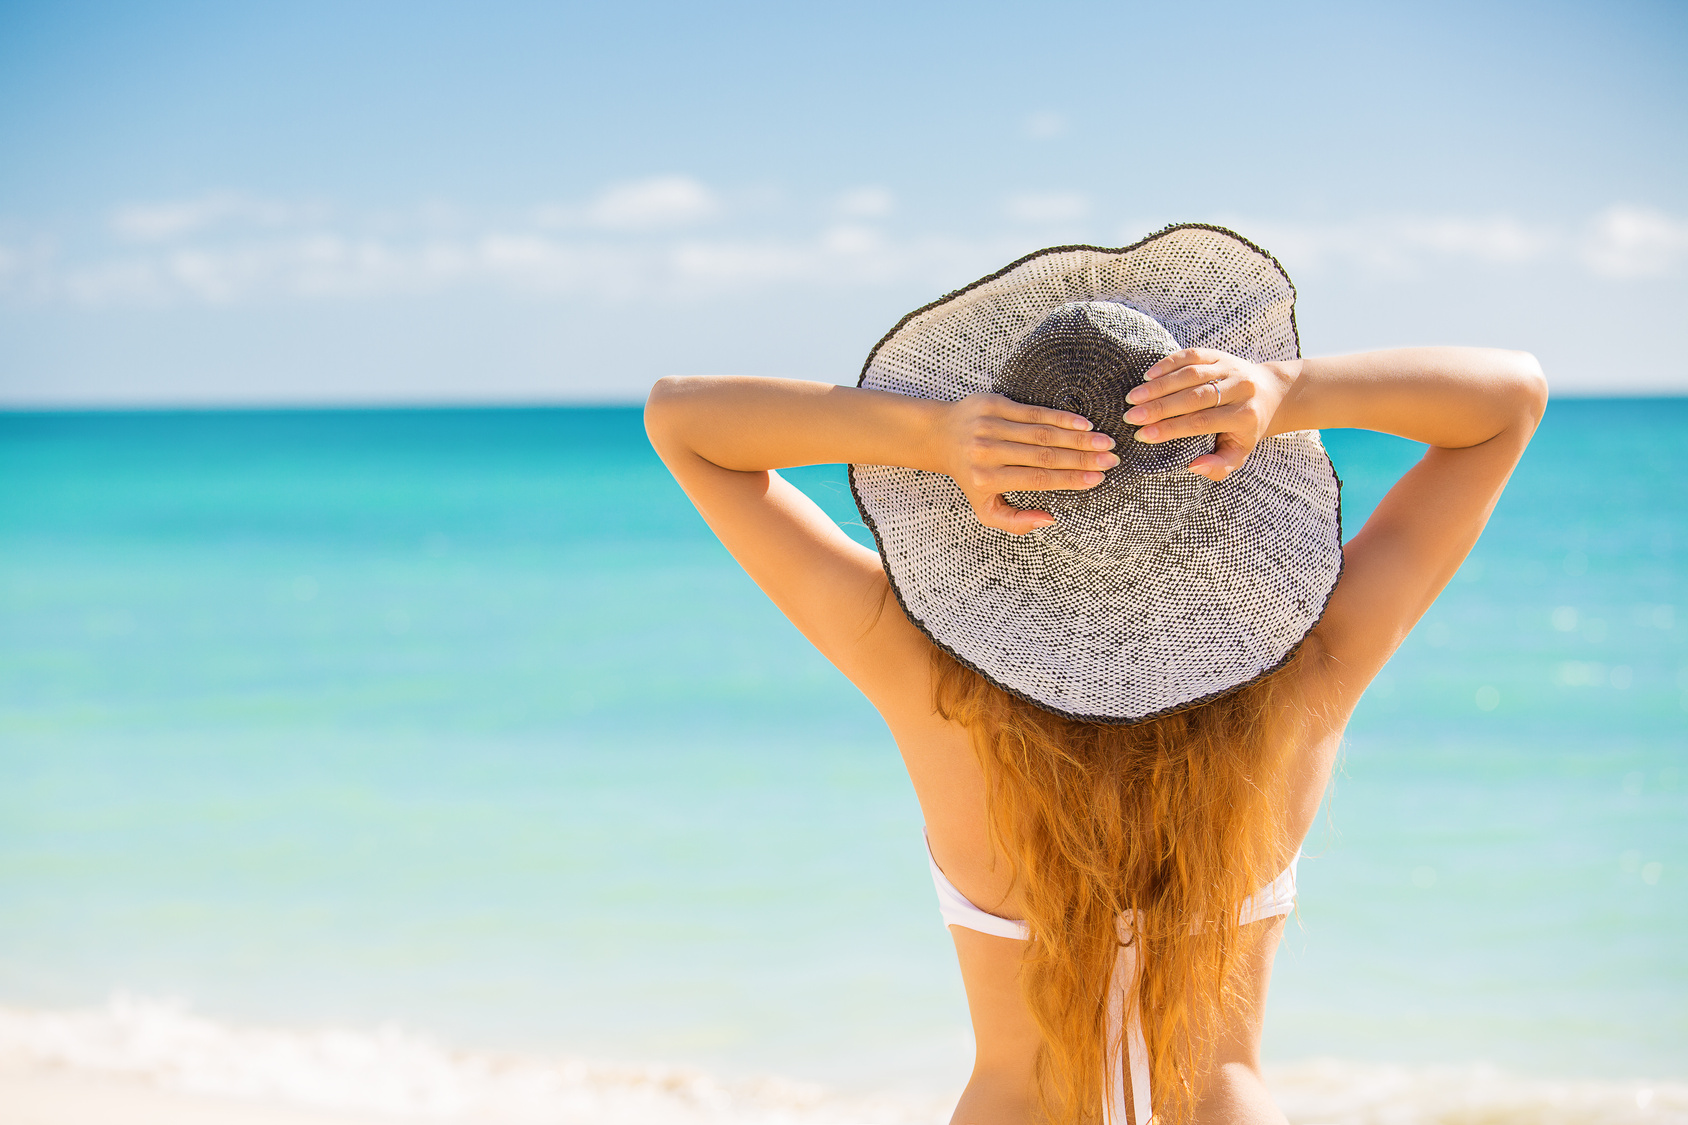 Woman enjoying beach relaxing joyful in summer by tropical ocean